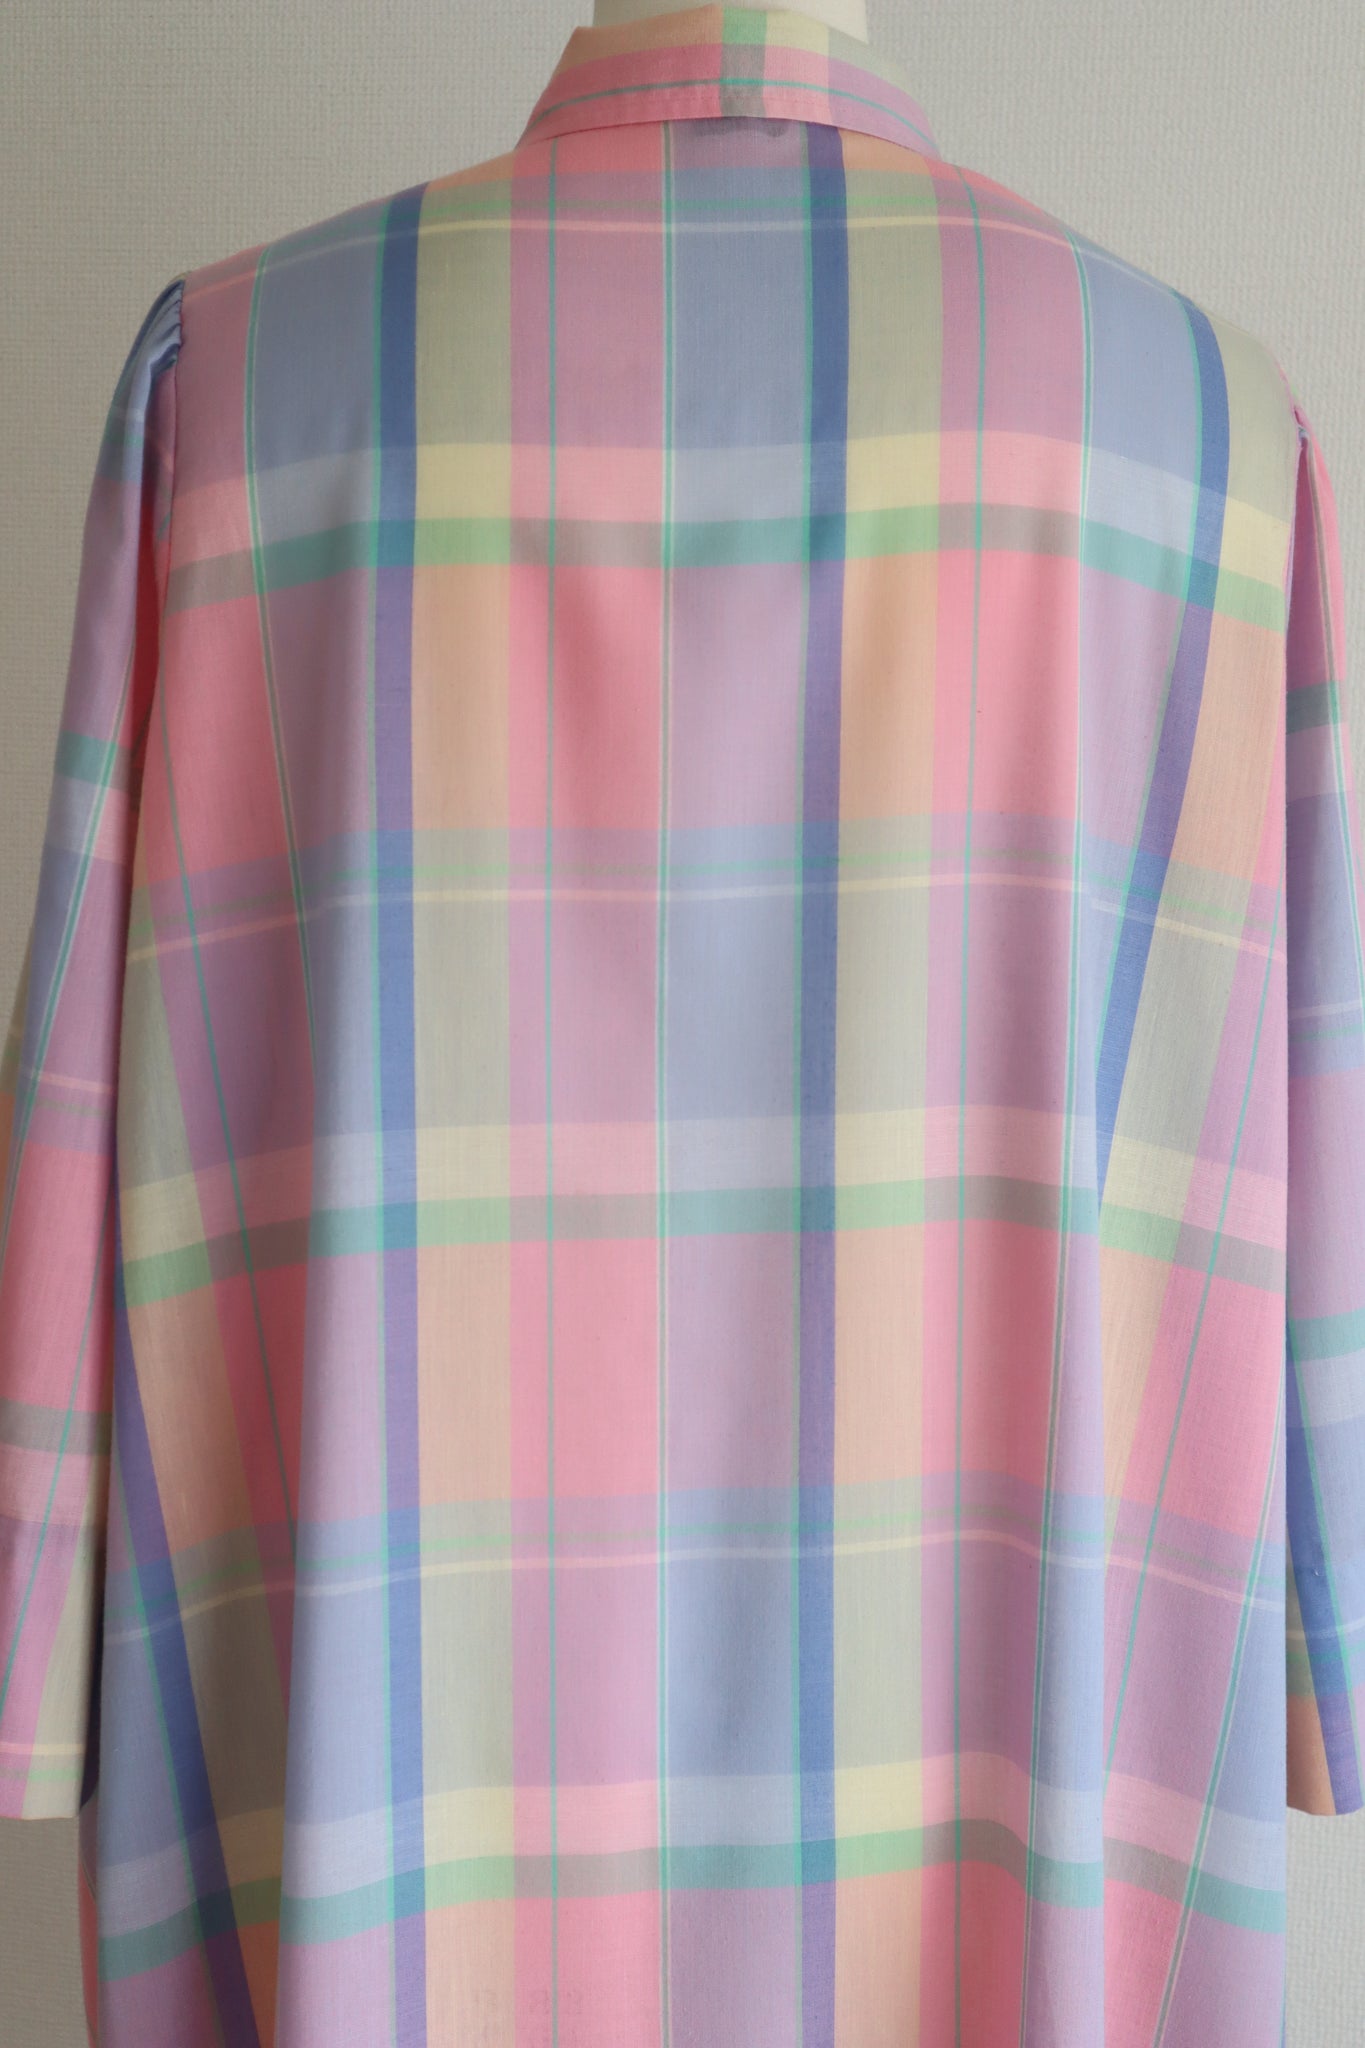 70s Pastel Rainbow Cotton Checked Maxi Dress